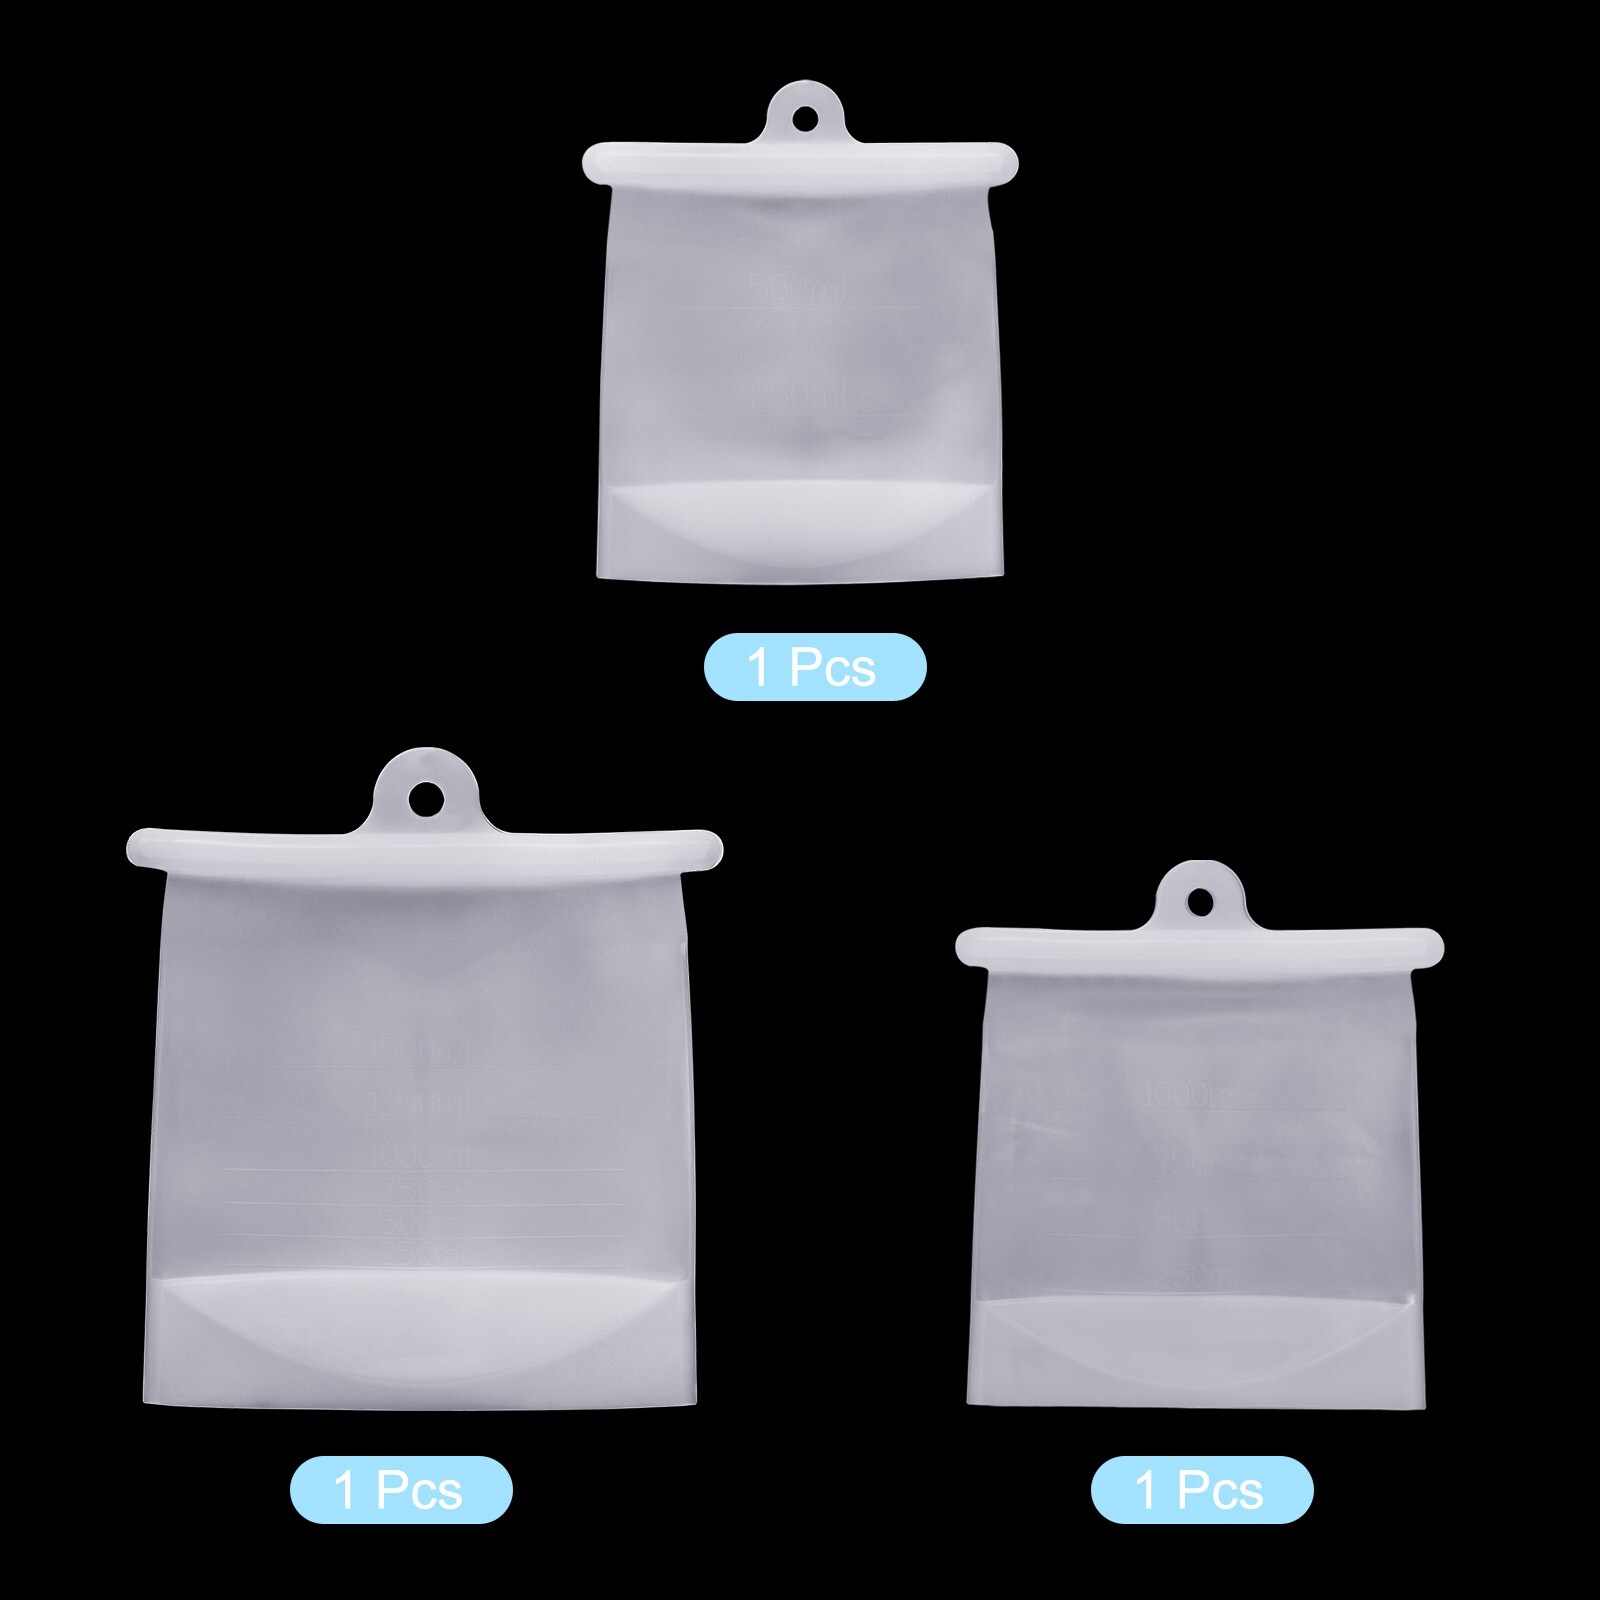 Reusable Storage Bags Silicone Food Bags Freezer Bags-3Pcs-White(S+M+L) - White - S+M+L